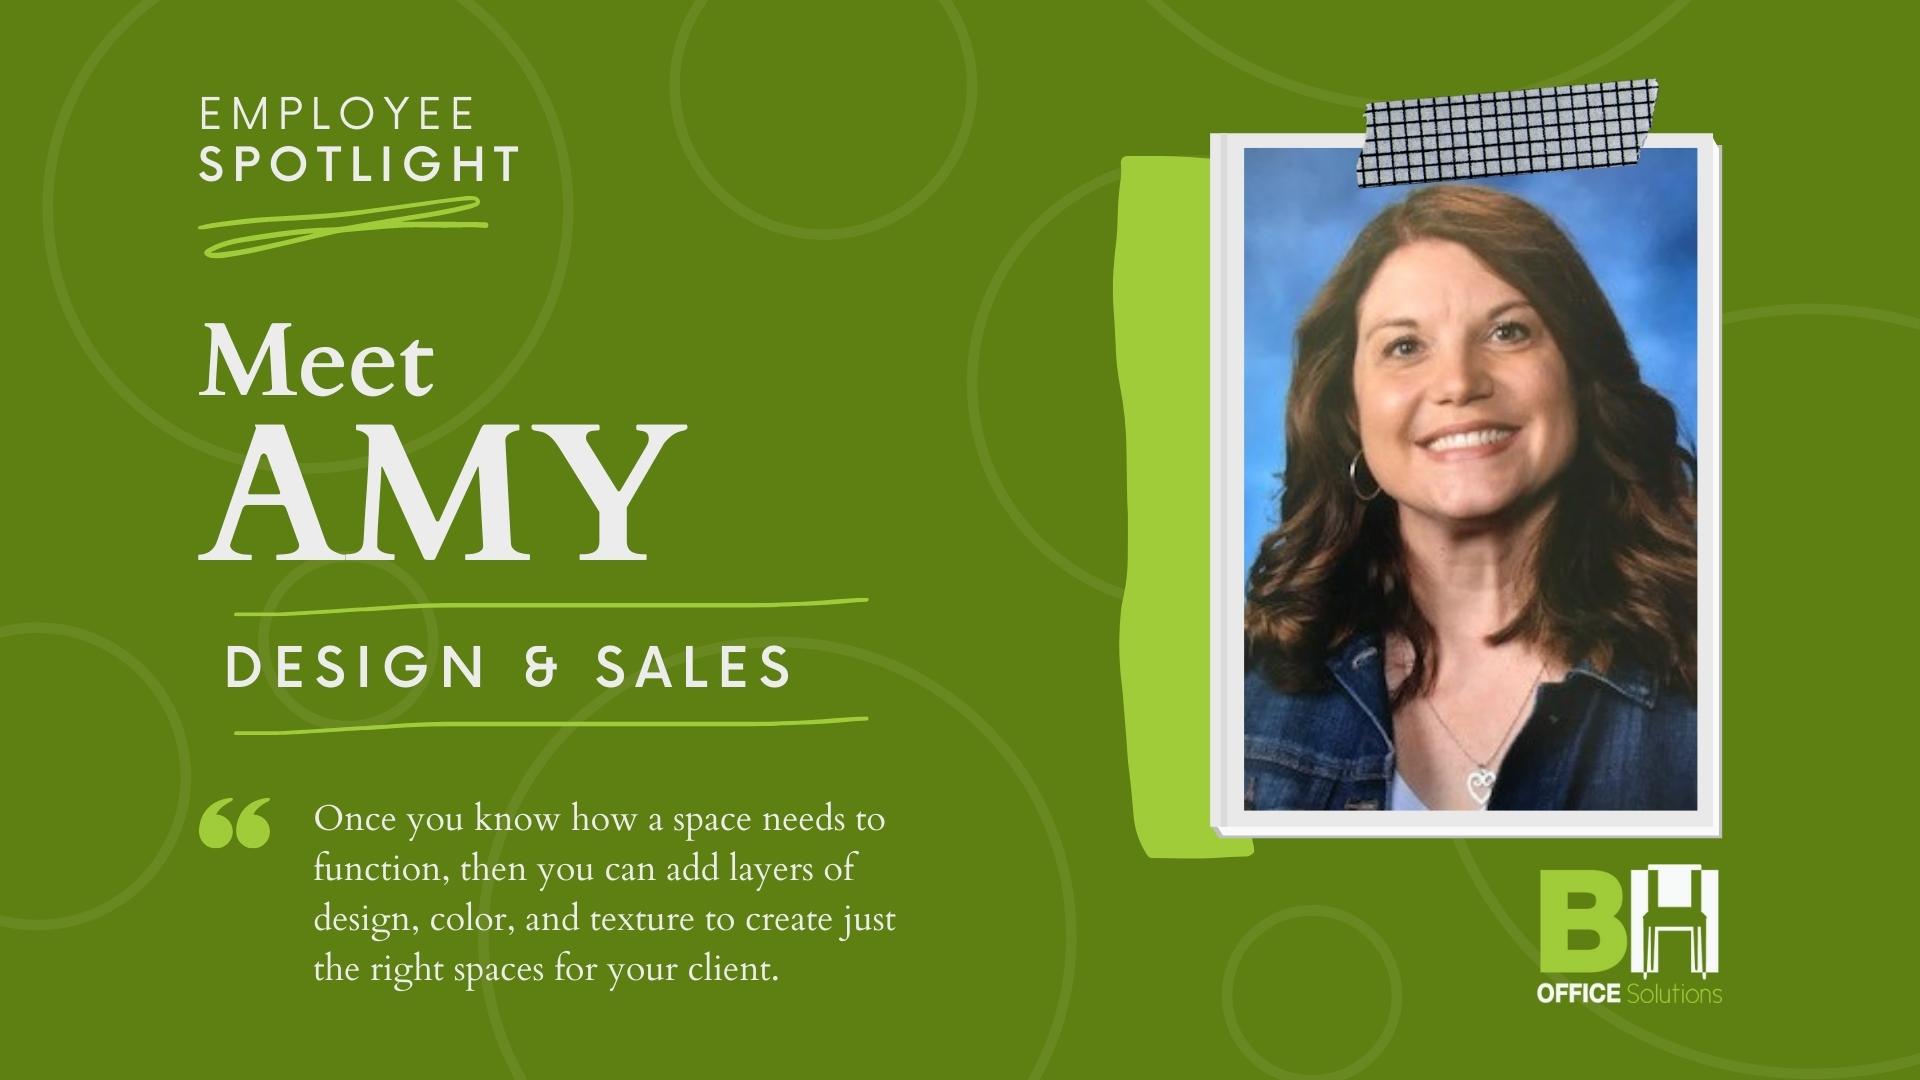 B&H Office Solutions Employee Spotlight - Amy Miller